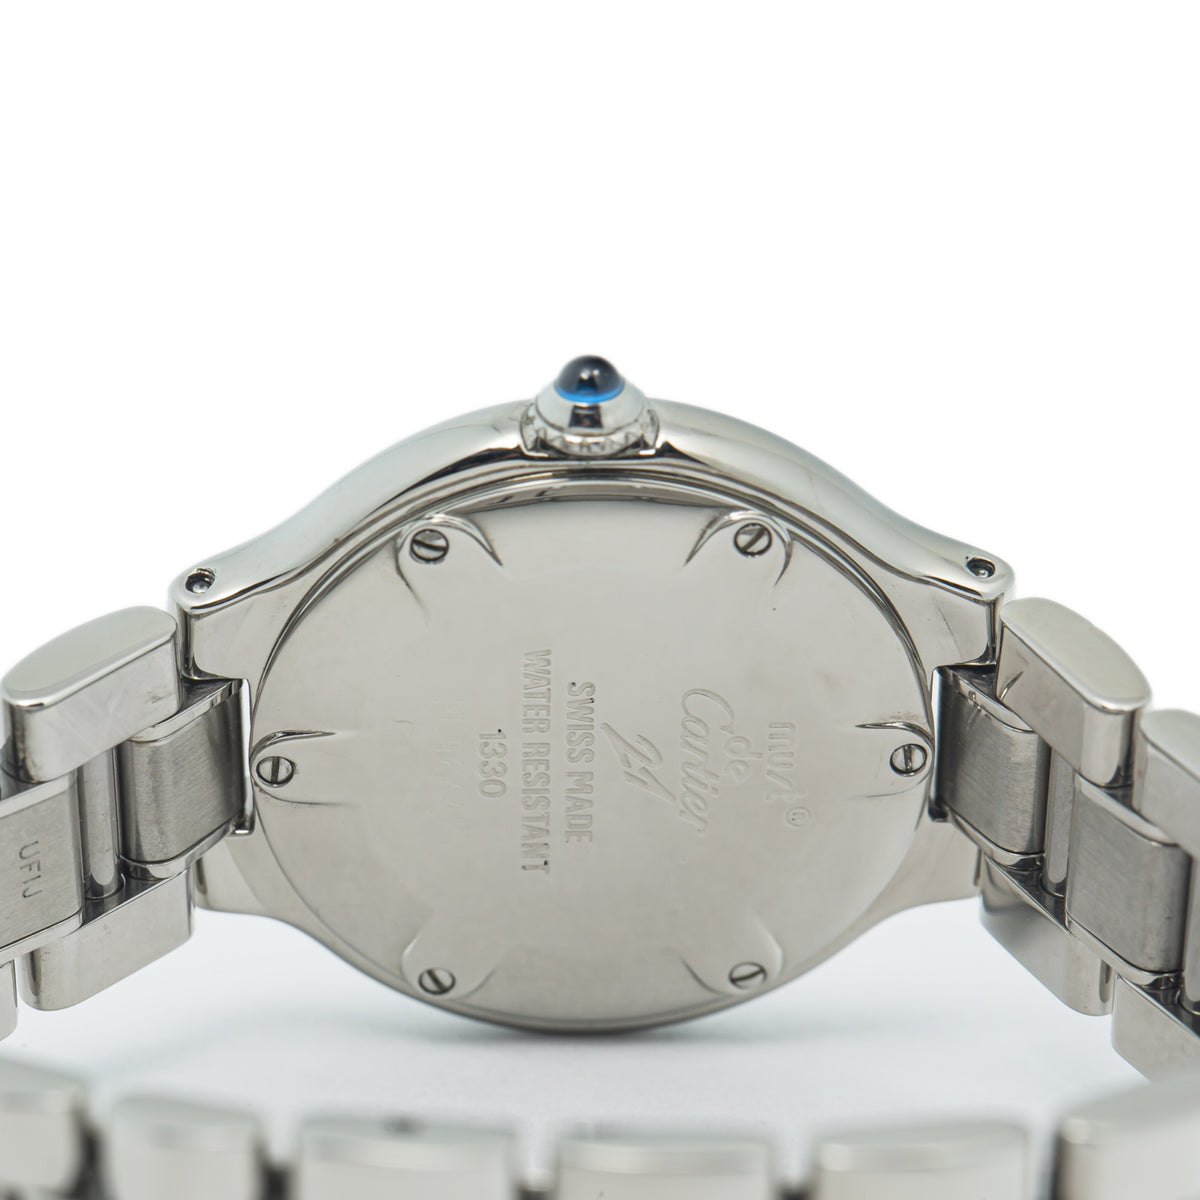 Cartier Must De 21 1330 W10110T2 Stainless Steel Quartz Ladie's Watch 28mm